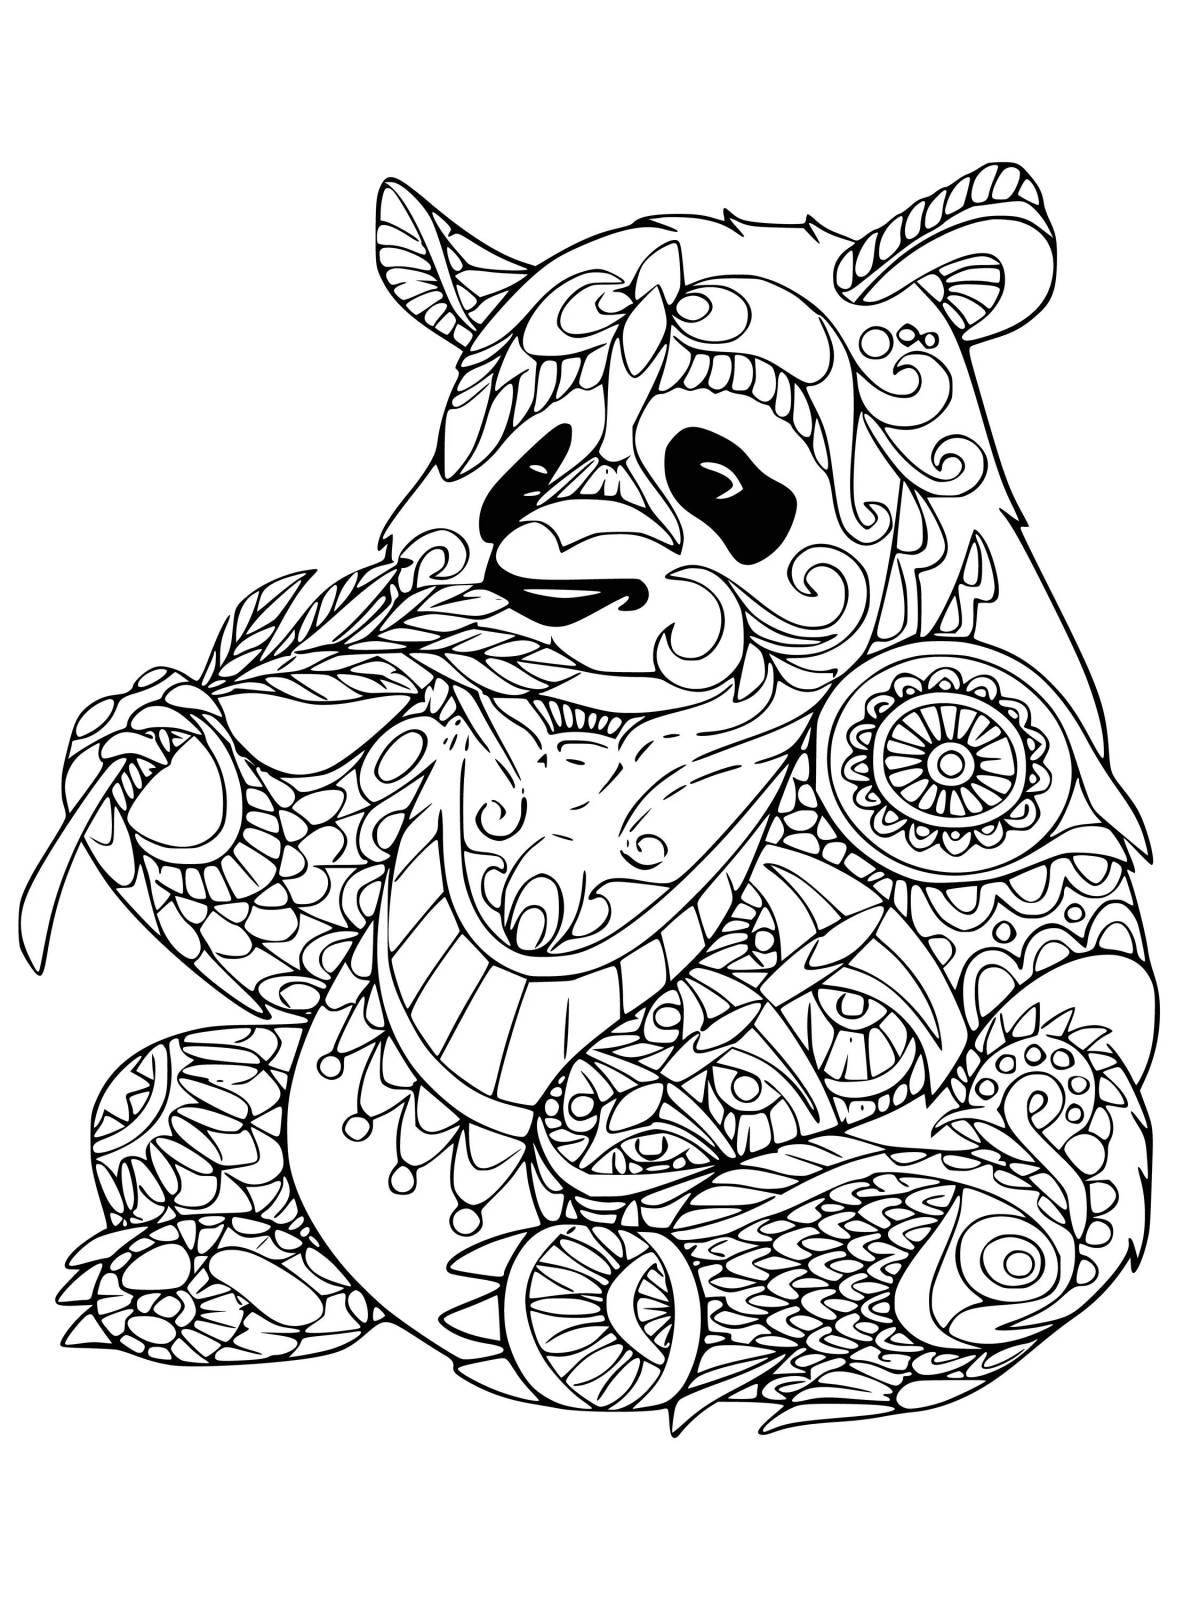 Majestic panda antistress coloring book